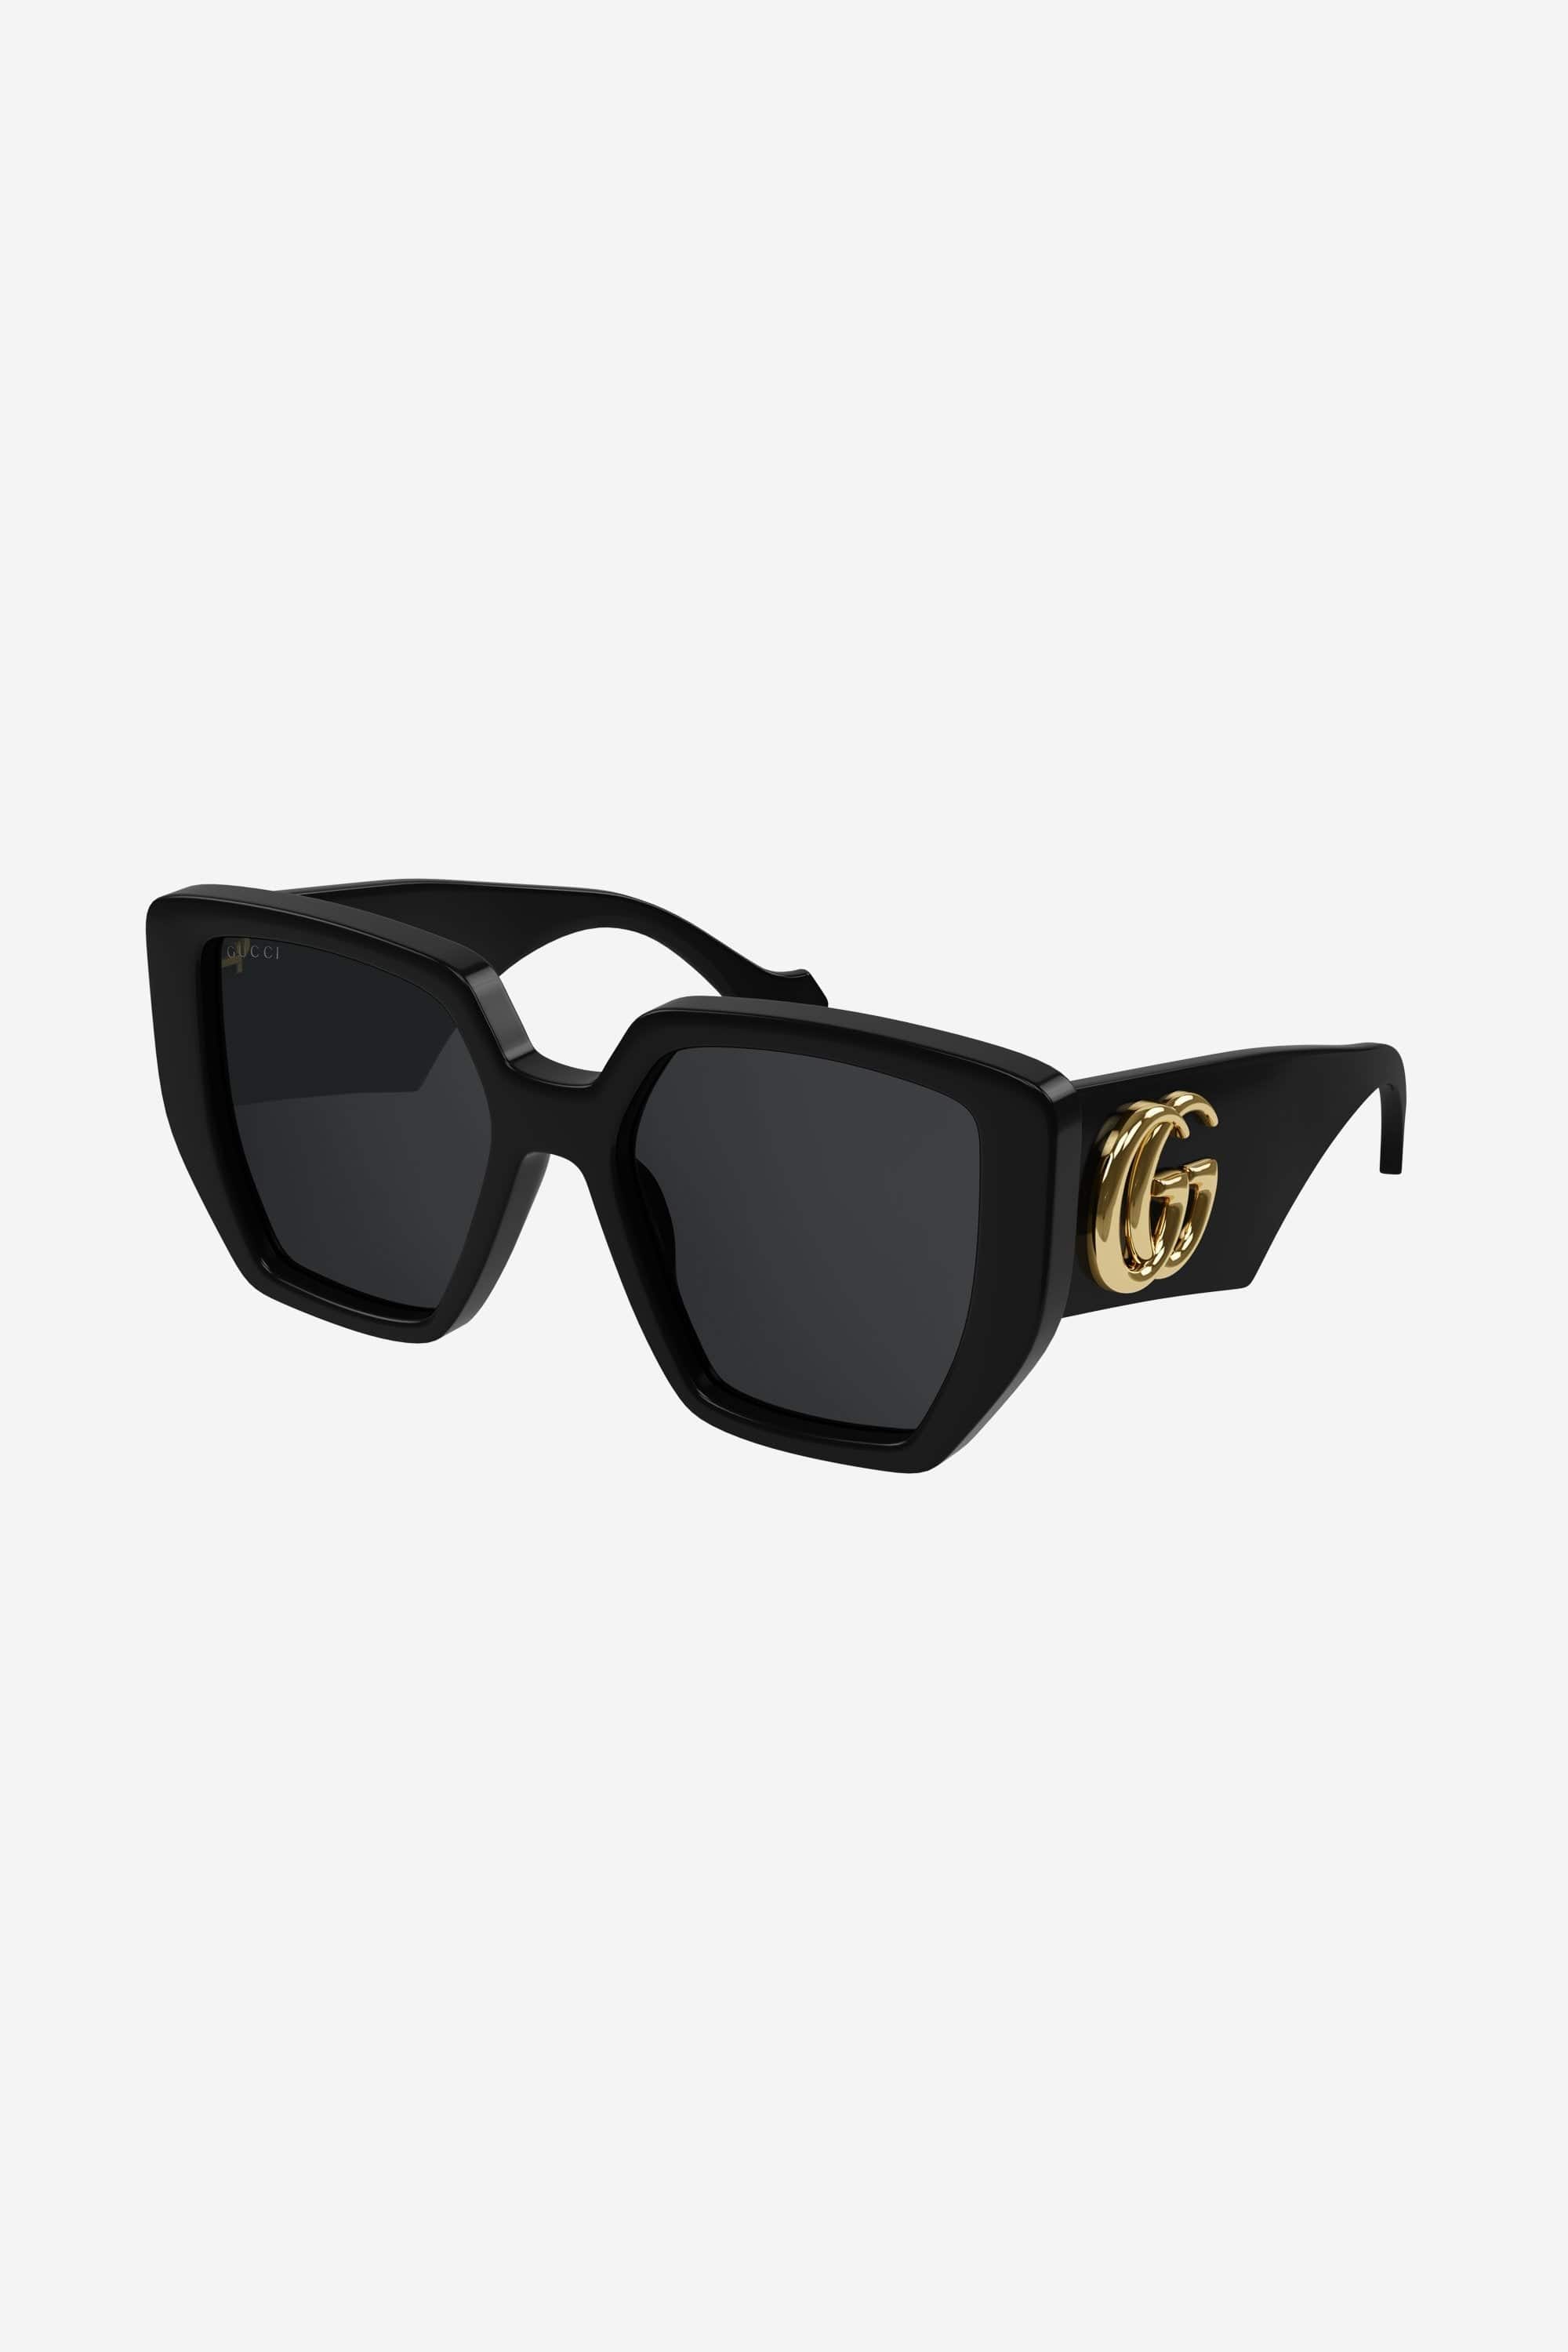 Gucci GG0956S oversized black sunglasses with maxi logo - Eyewear Club